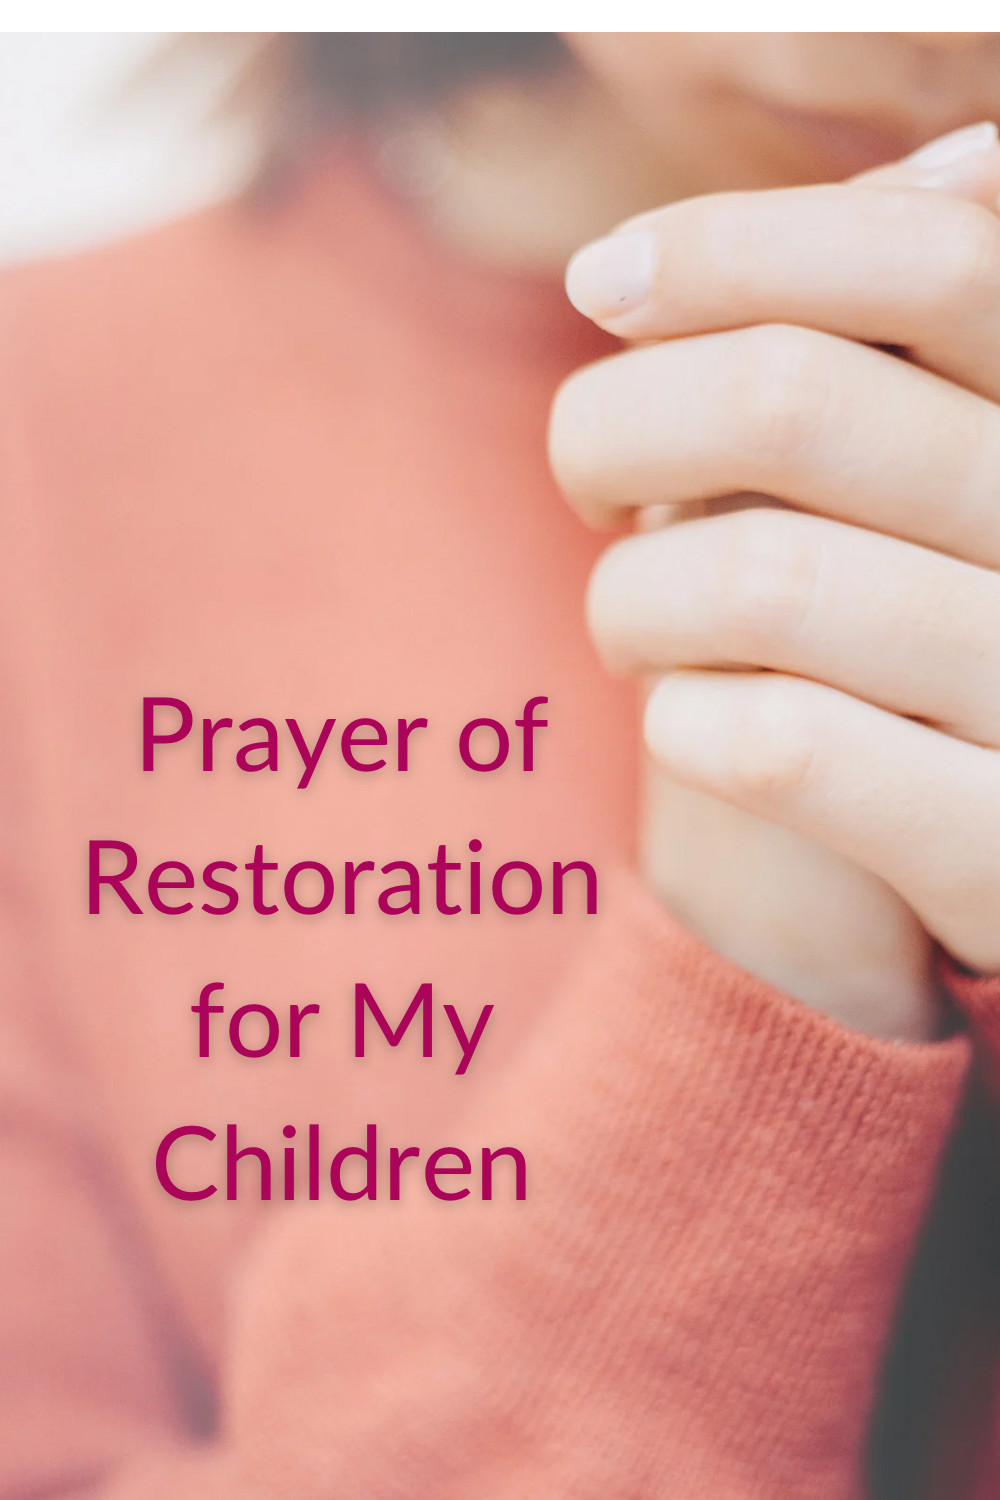 A Prayer of Restoration